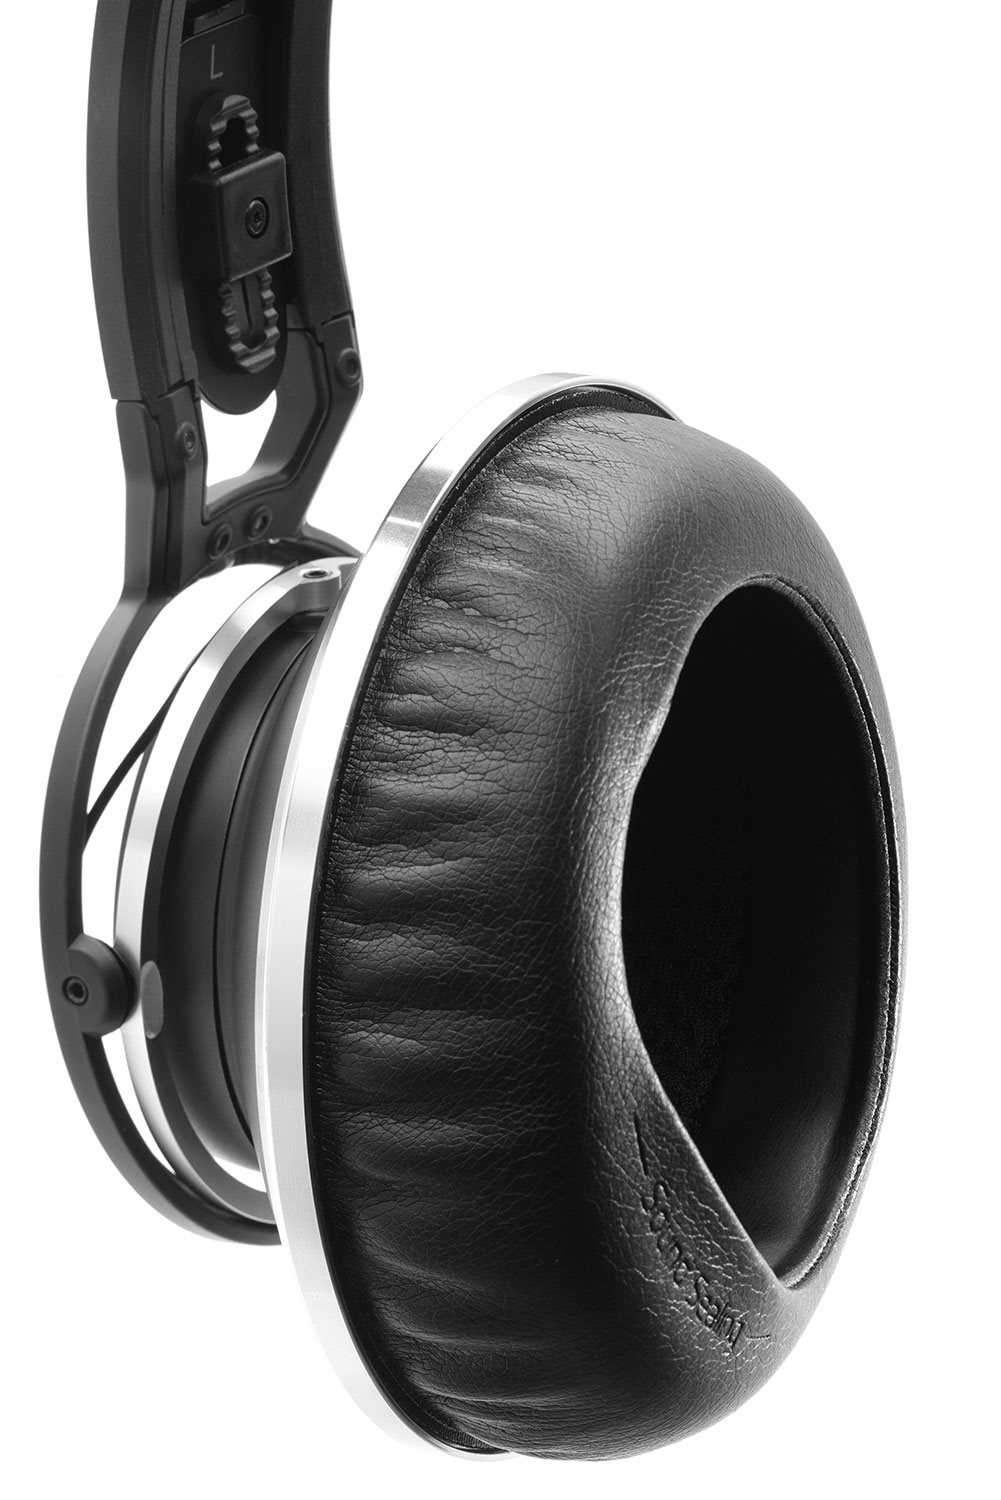 AKG K872 Master Reference Studio Headphones - PSSL ProSound and Stage Lighting